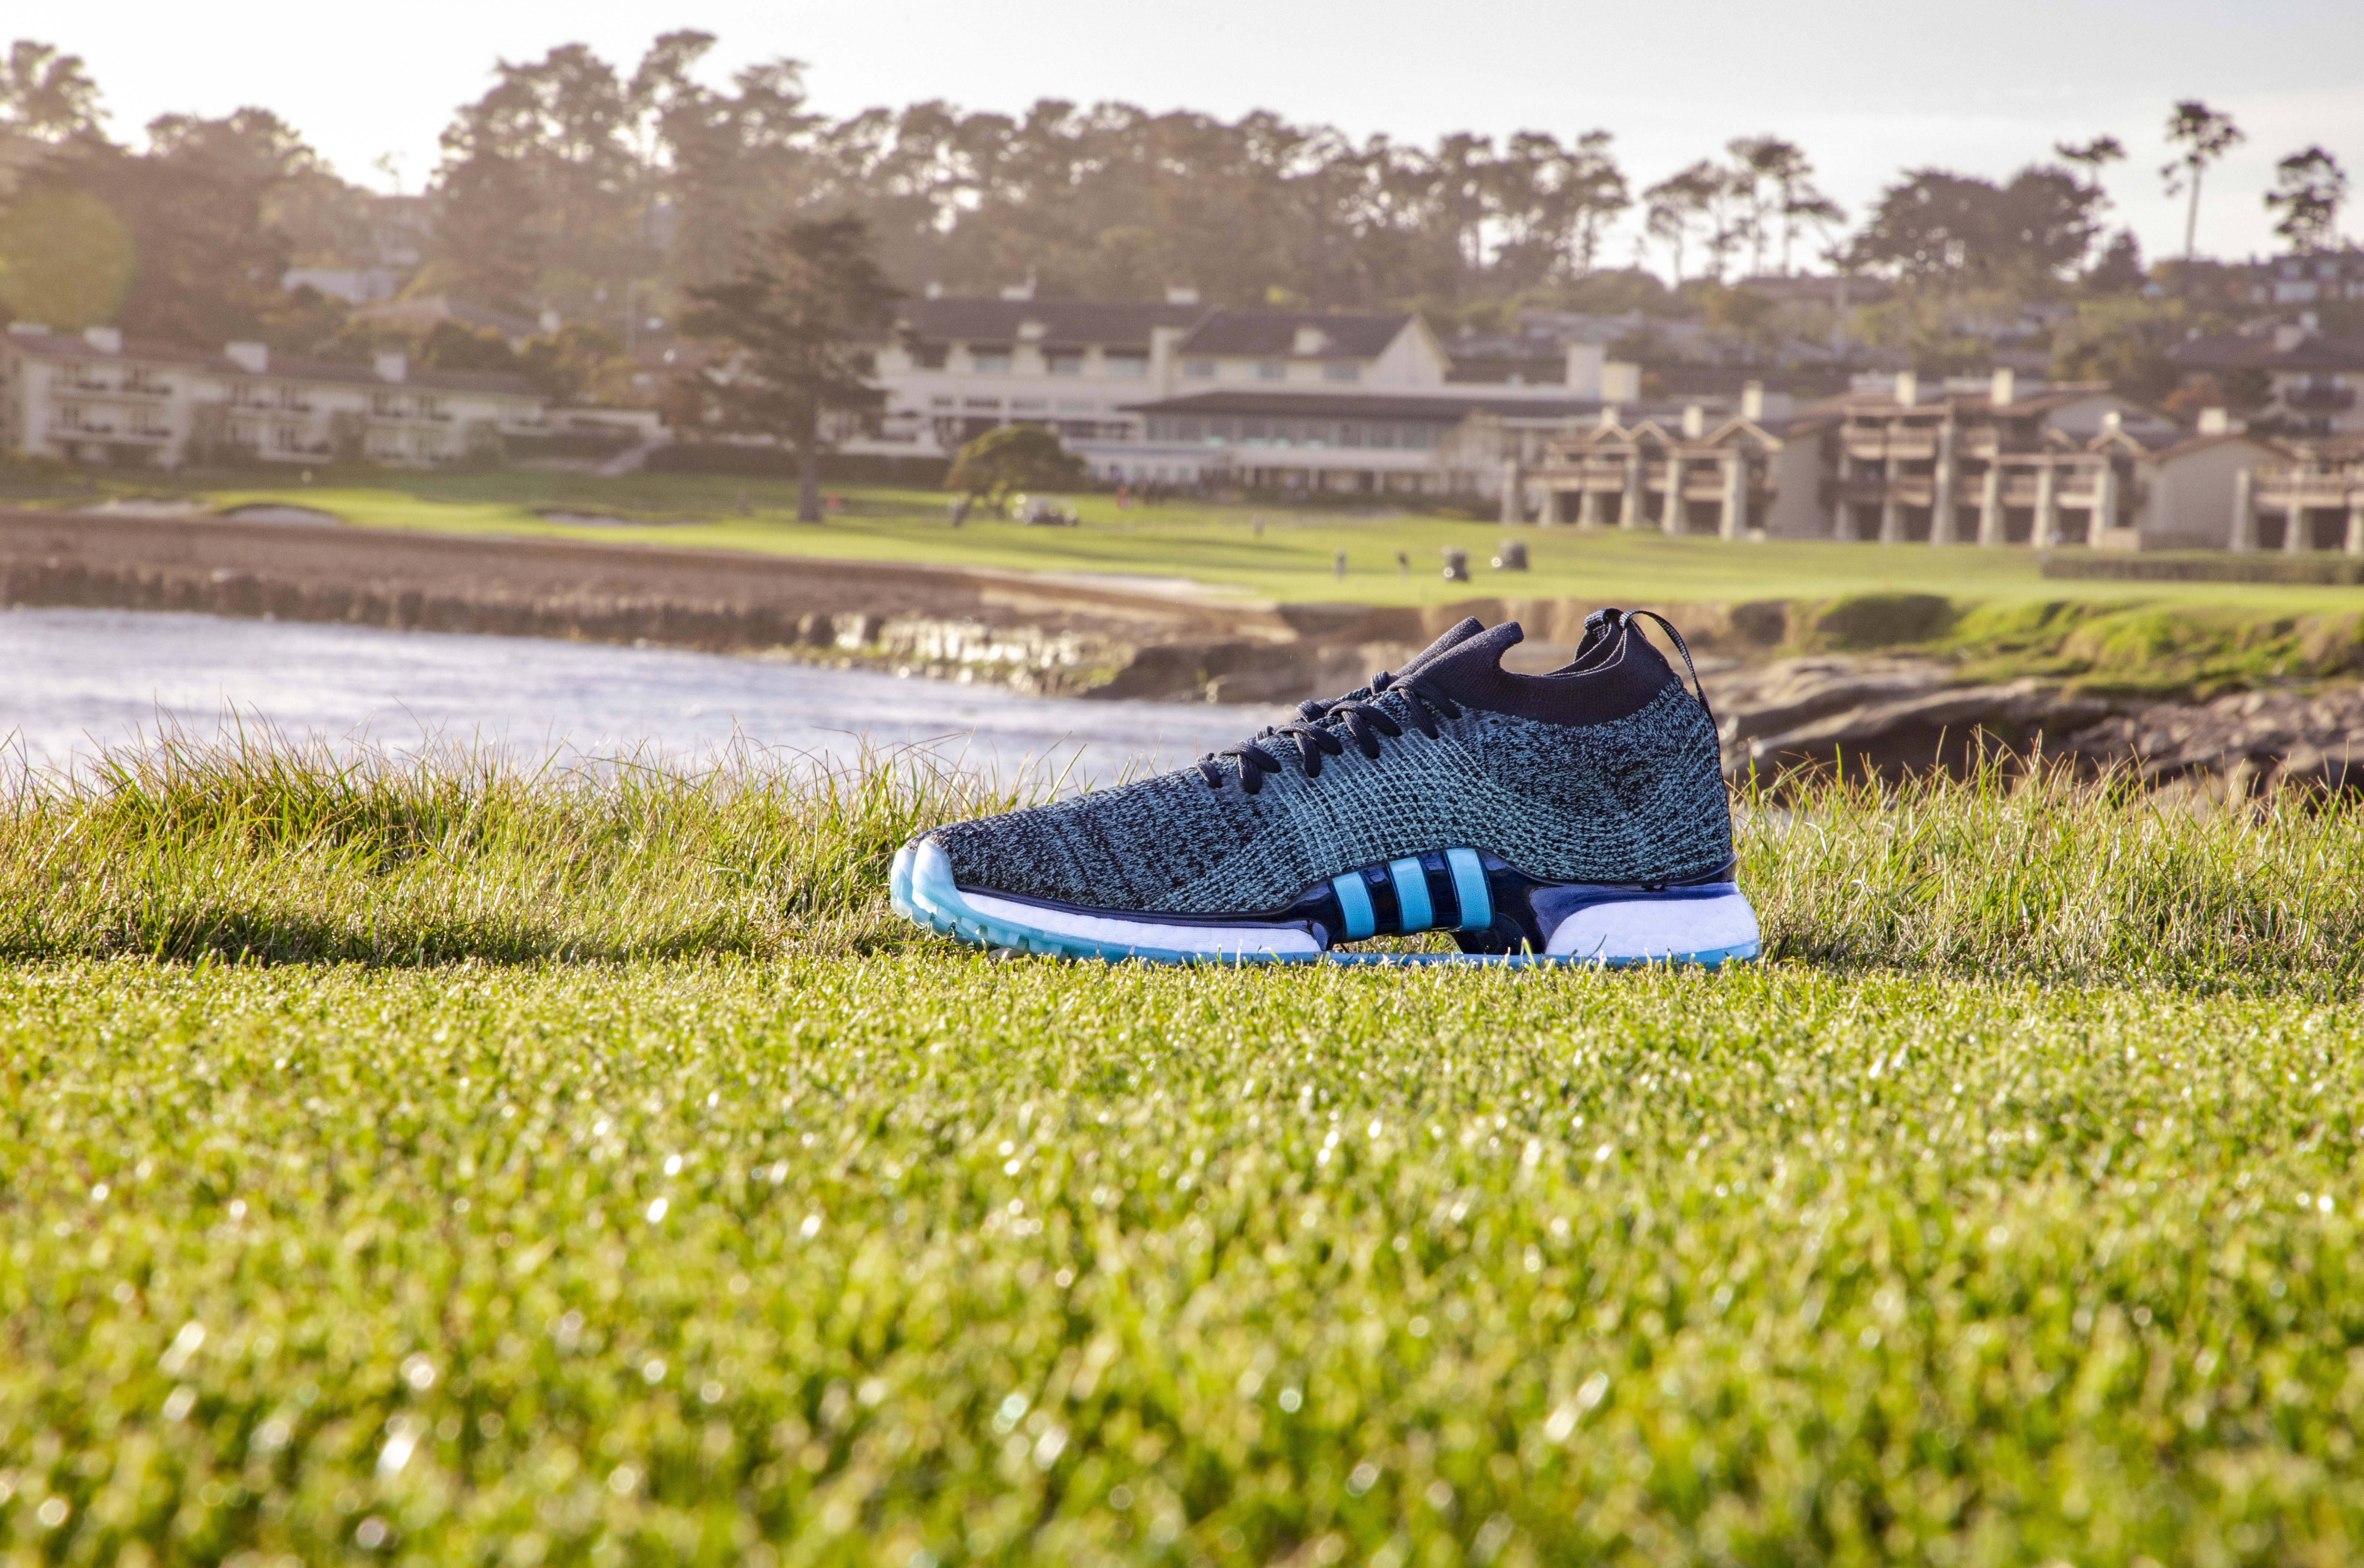 adidas Golf unveils Tour360 XT Parley shoe ahead of 2019 US Open